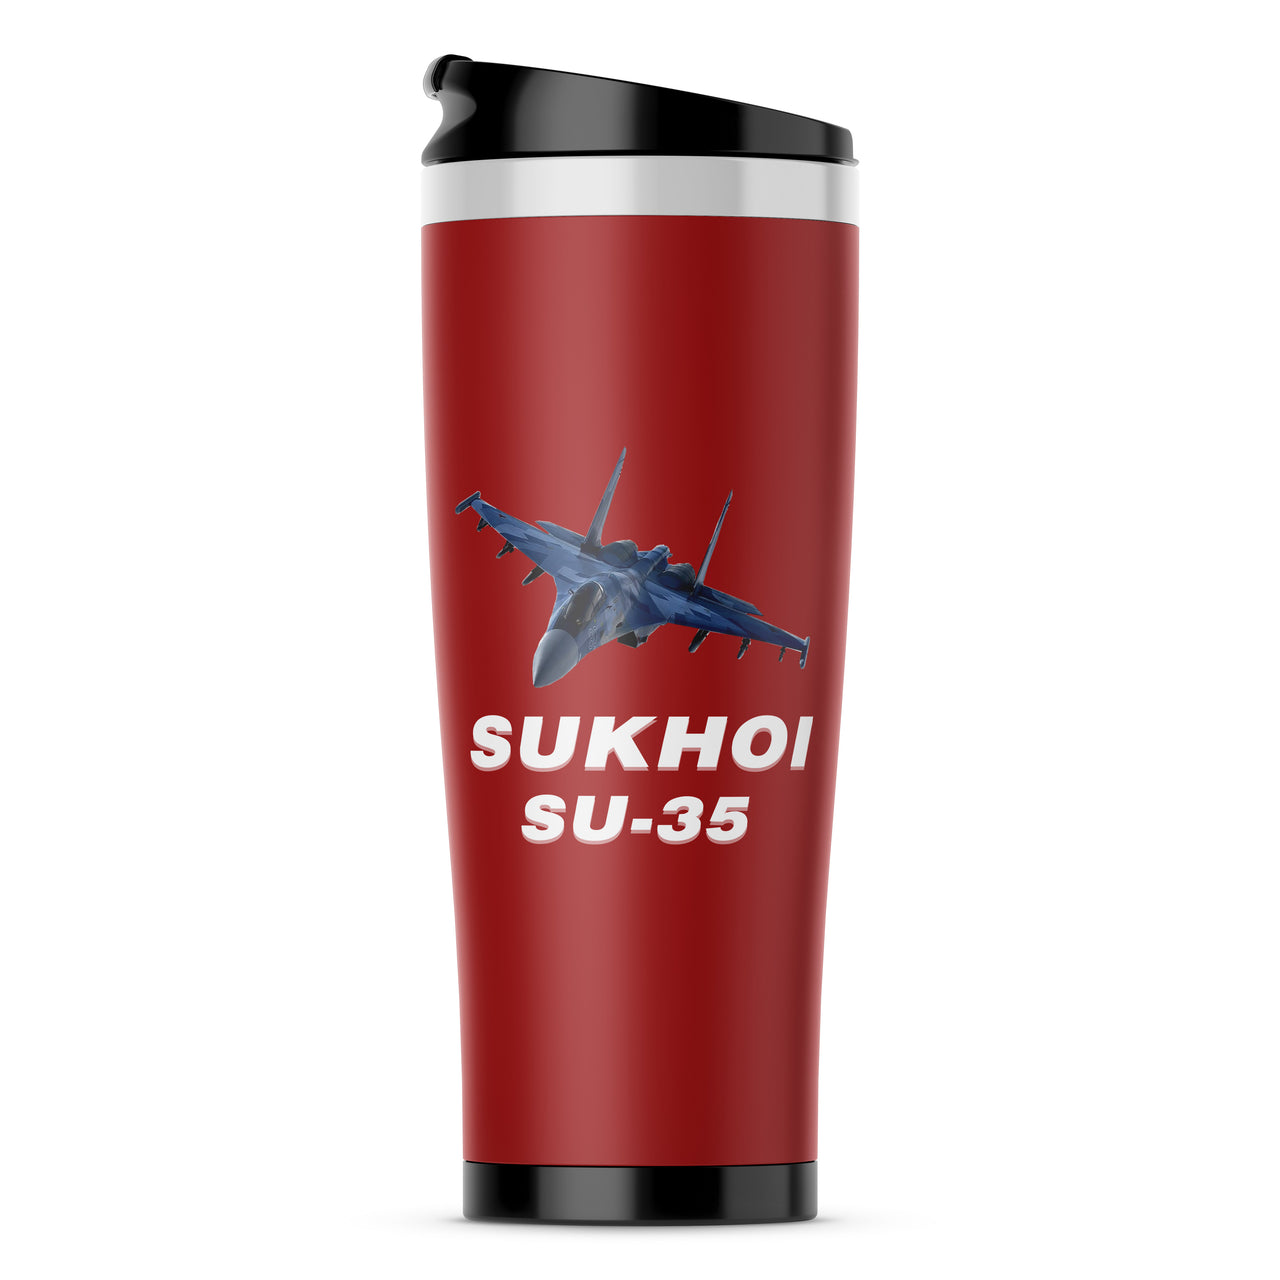 The Sukhoi SU-35 Designed Travel Mugs